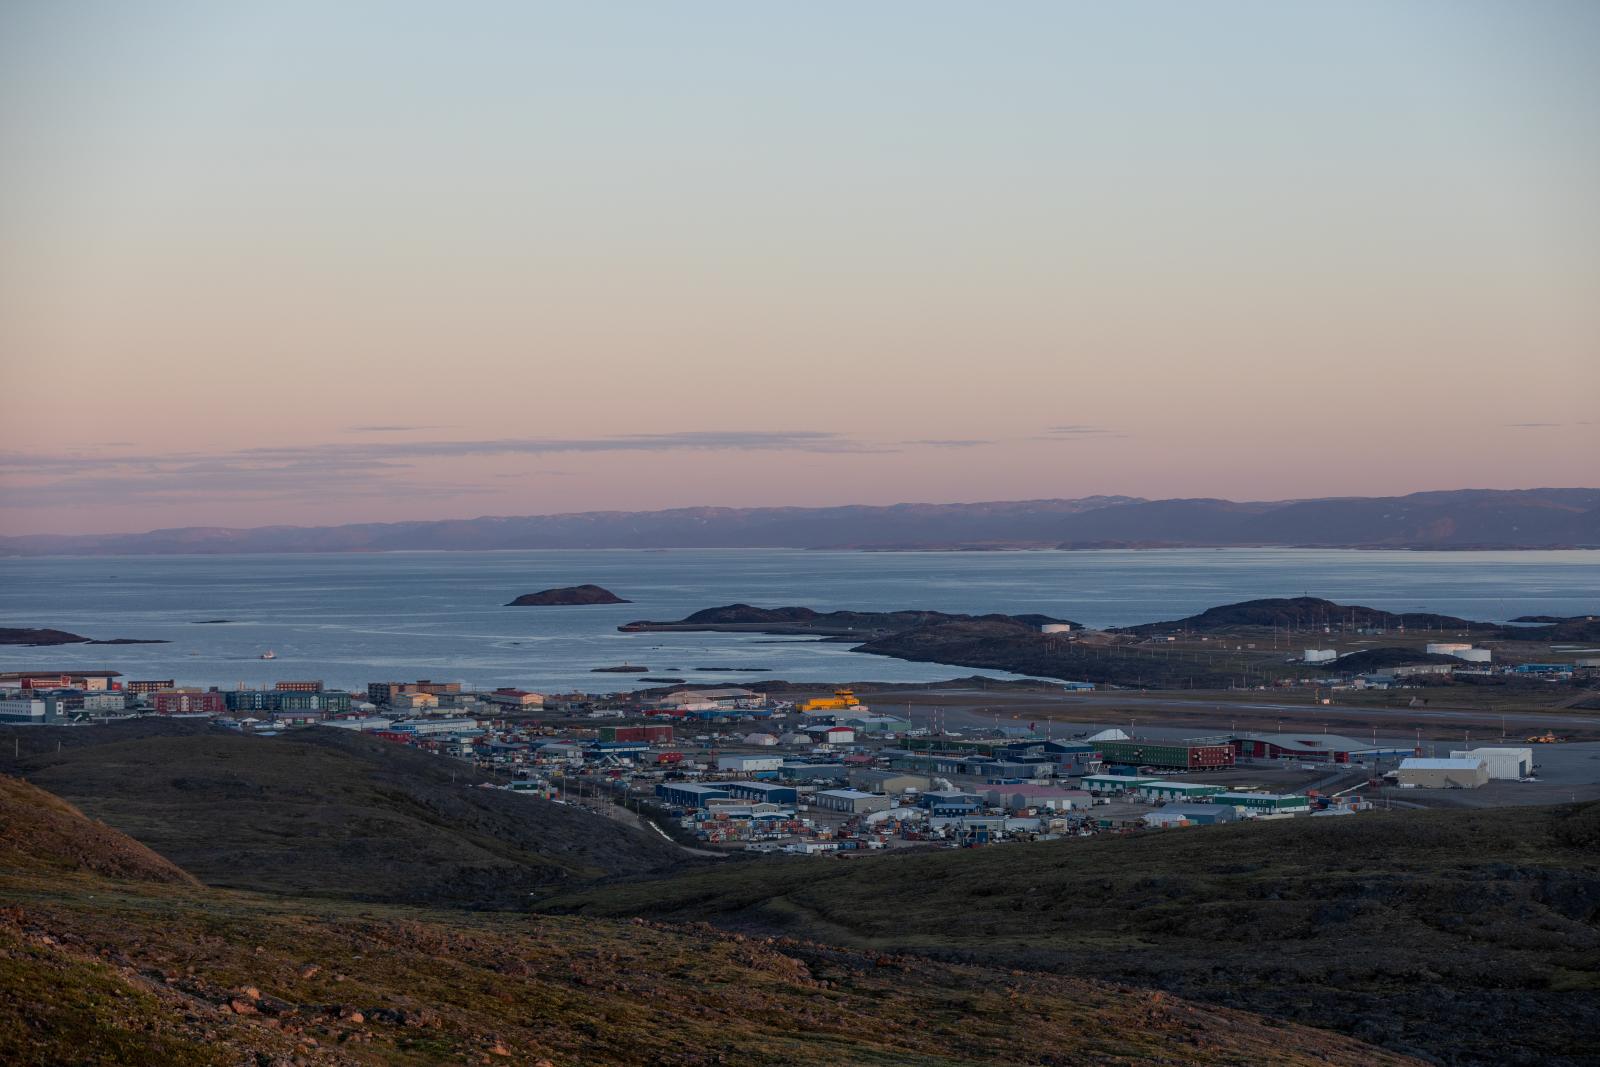 City of Iqaluit | Buy this image